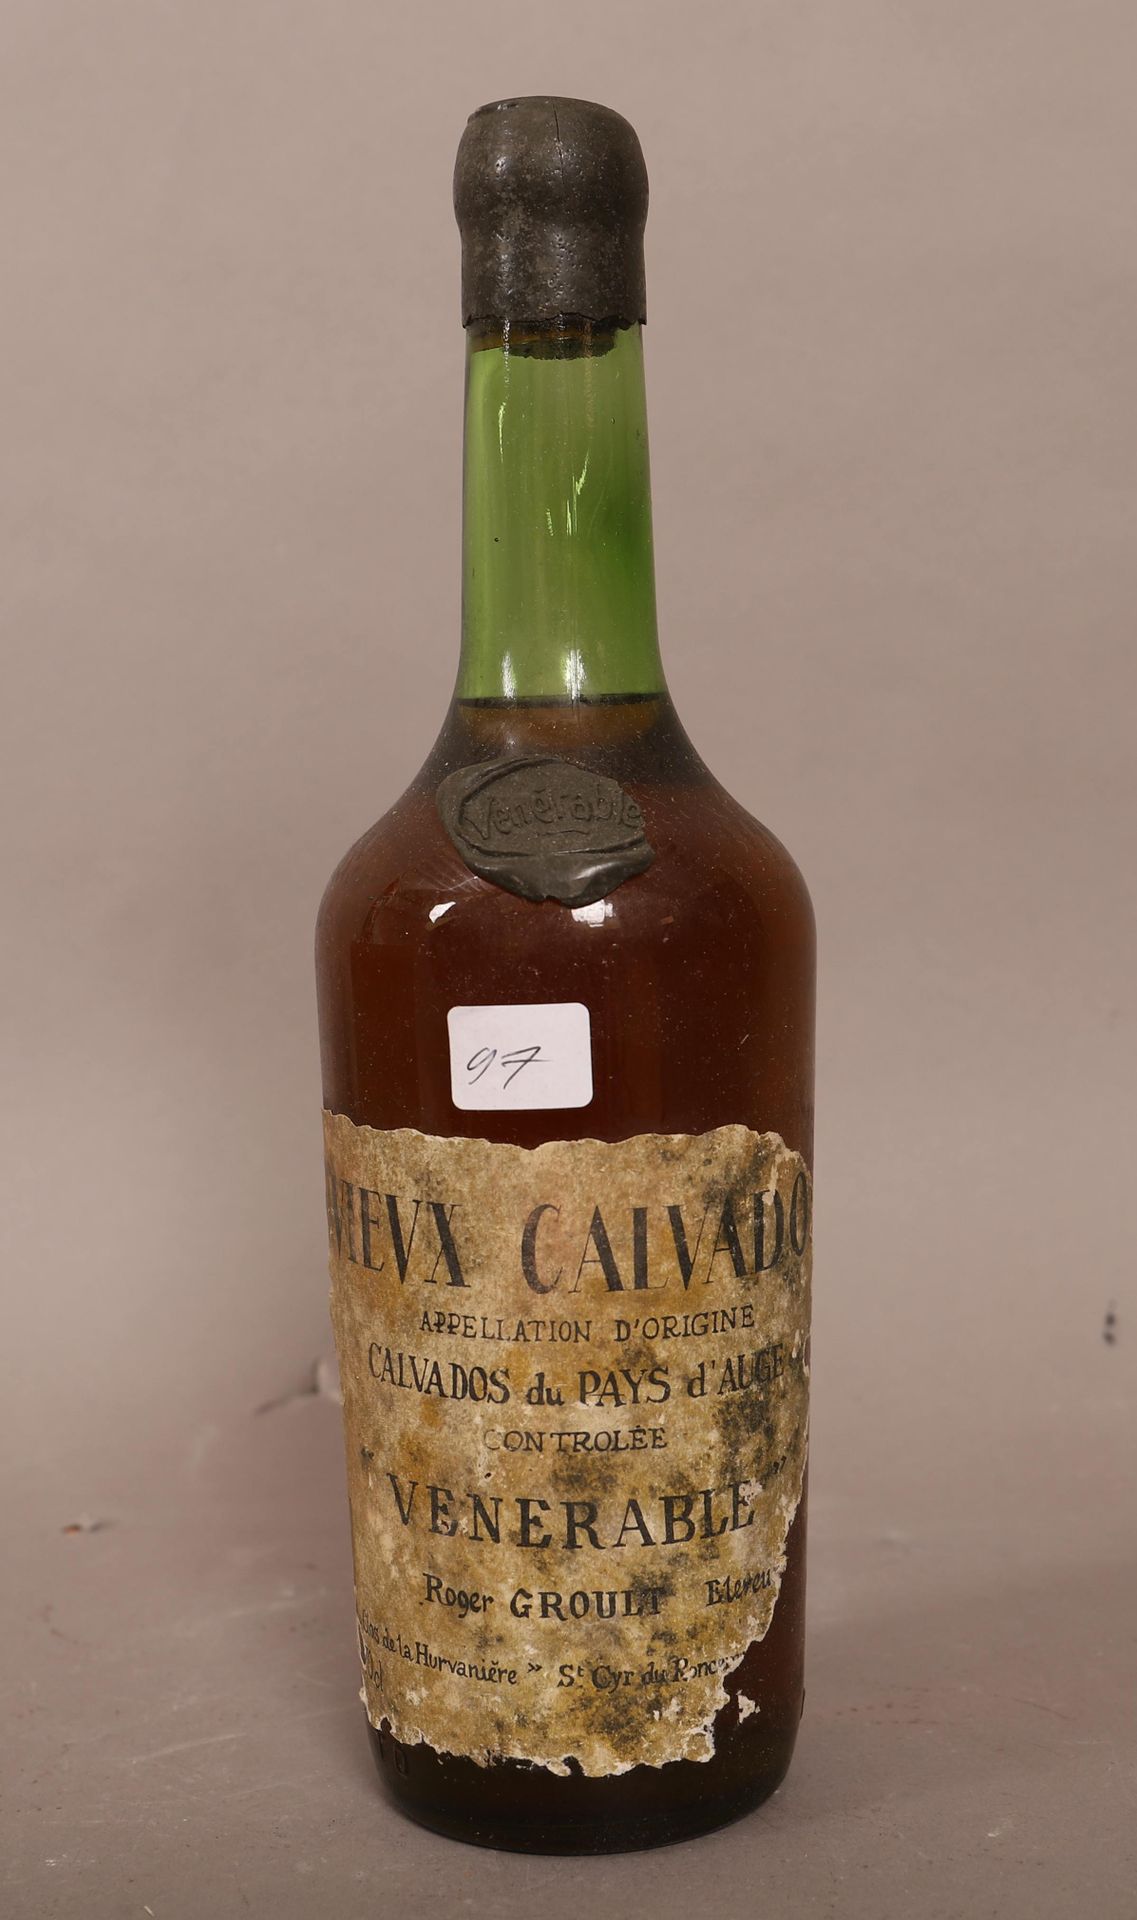 Null 老卡尔瓦多斯酒 (x1)

尊贵的

奥格地区

0,70L